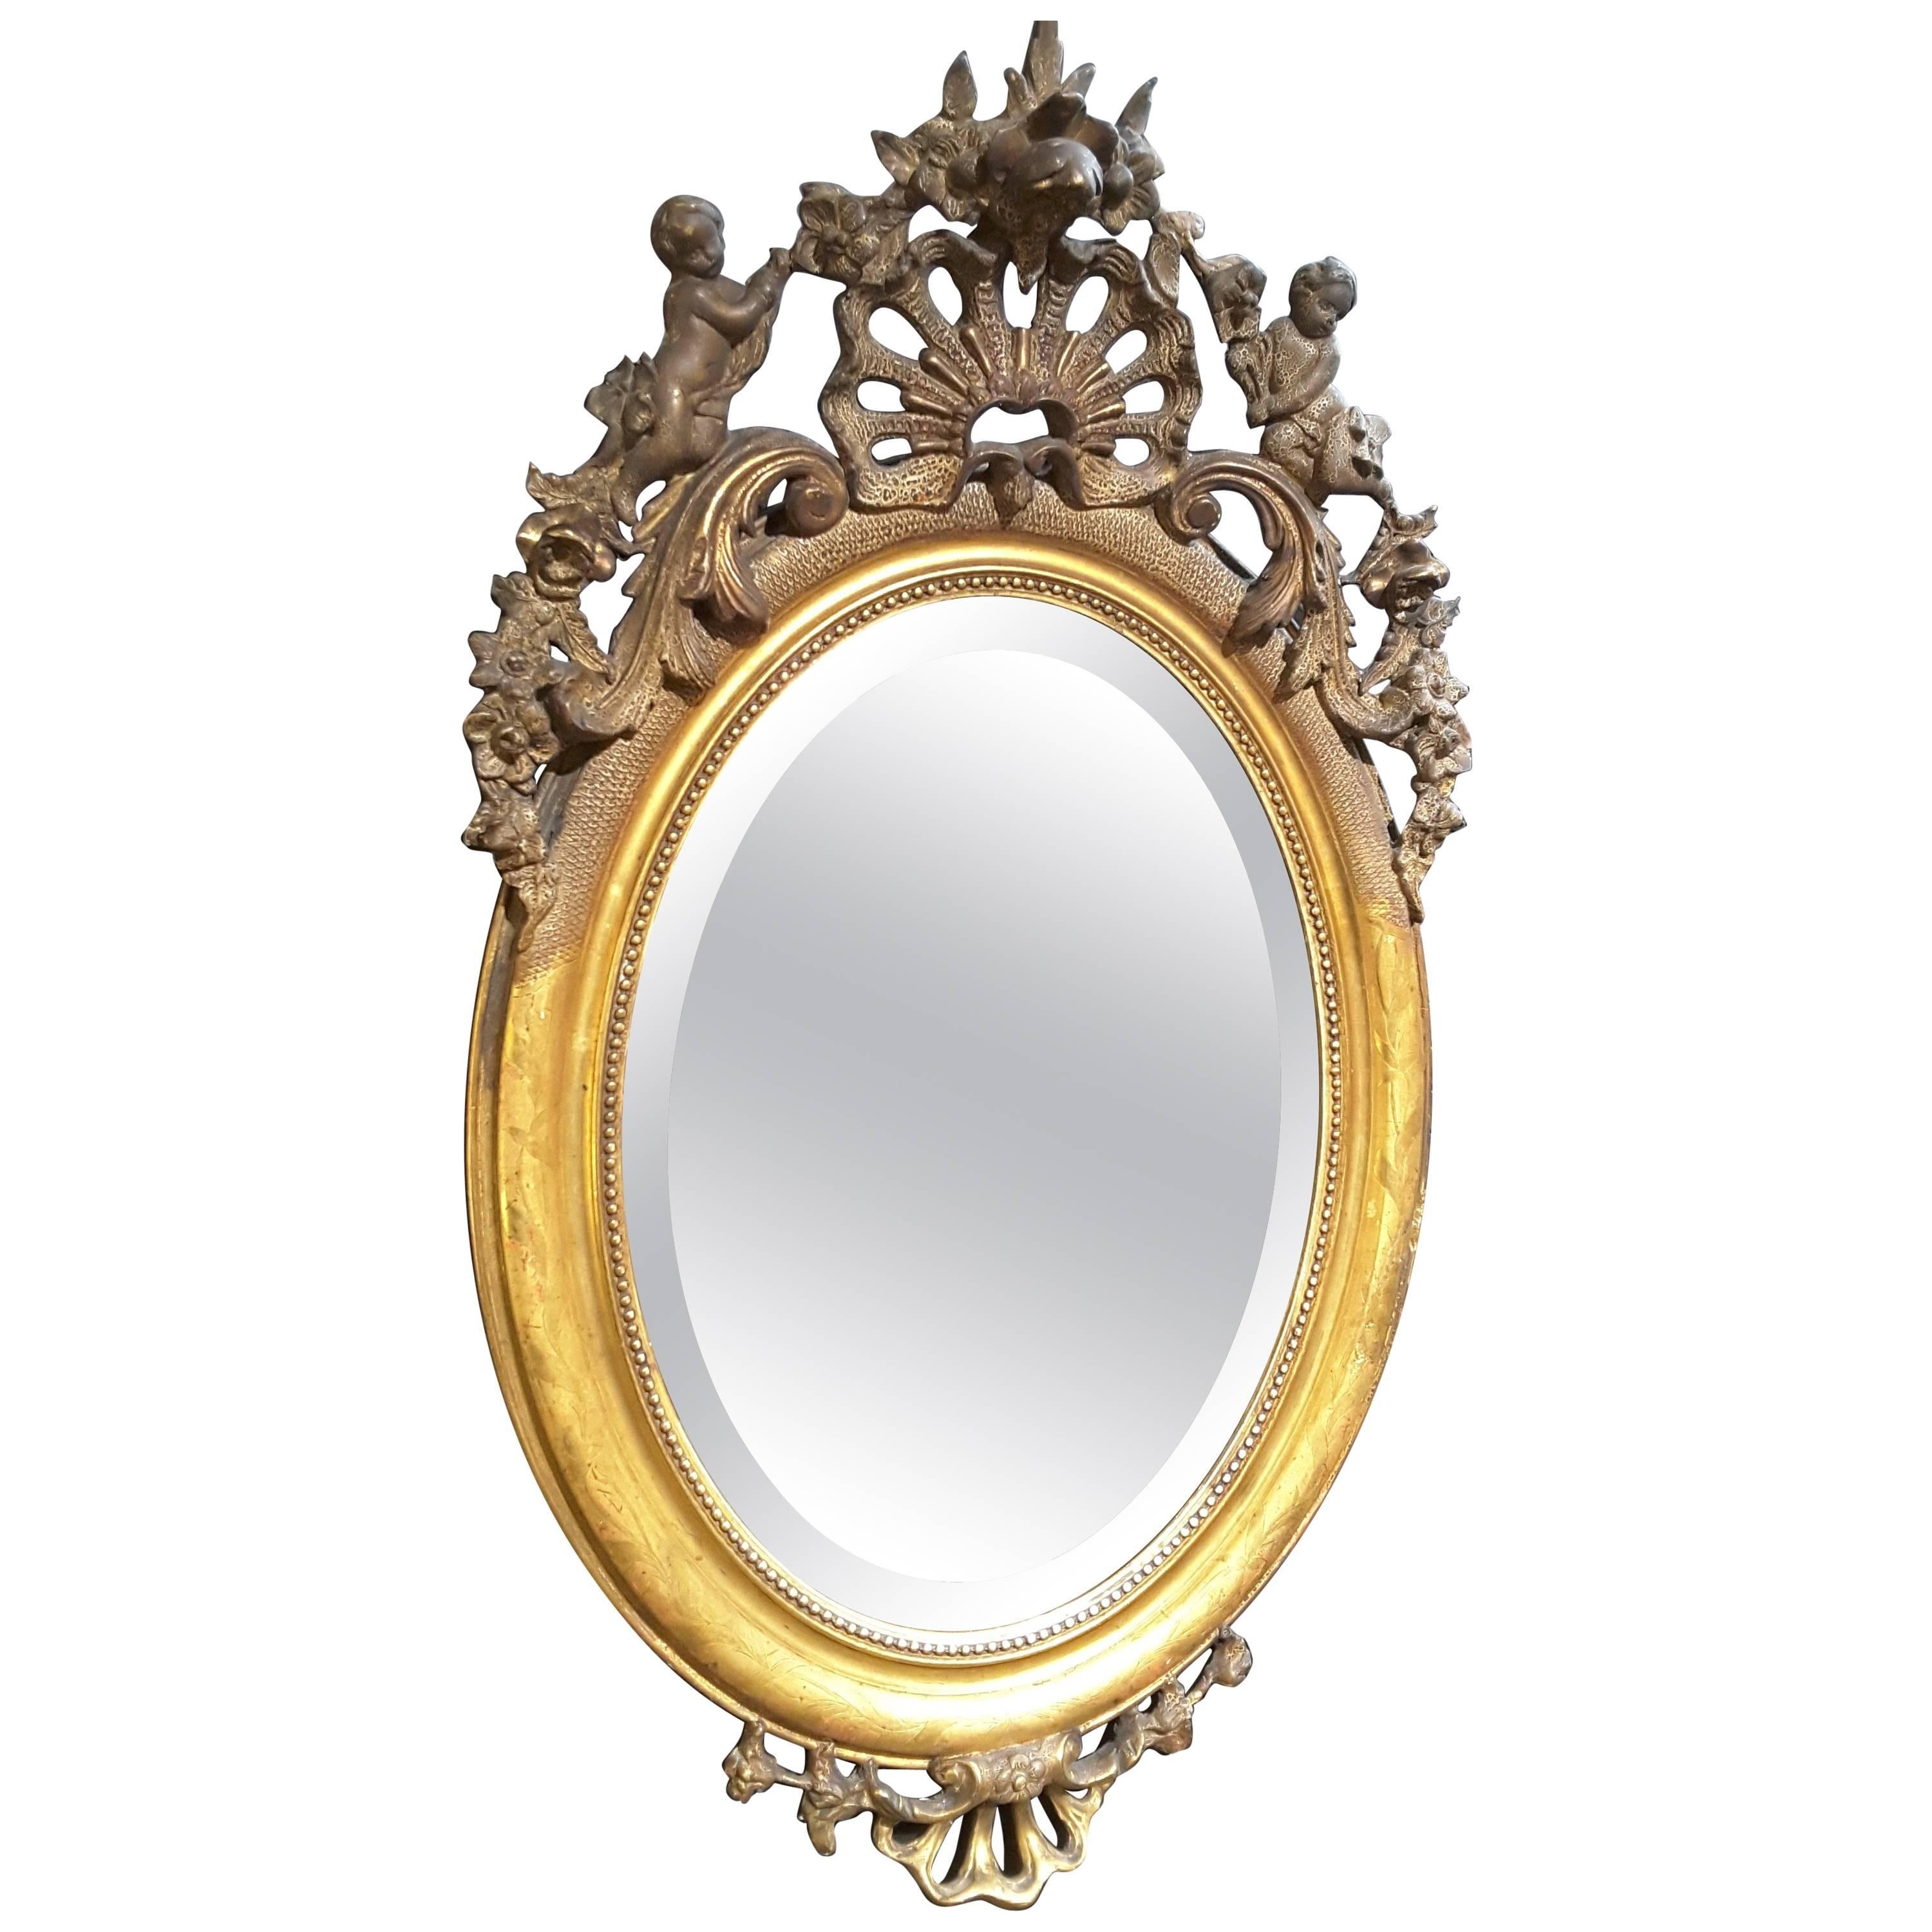 French Gilt Cherub Oval Bevelled Mirror, 19th Century